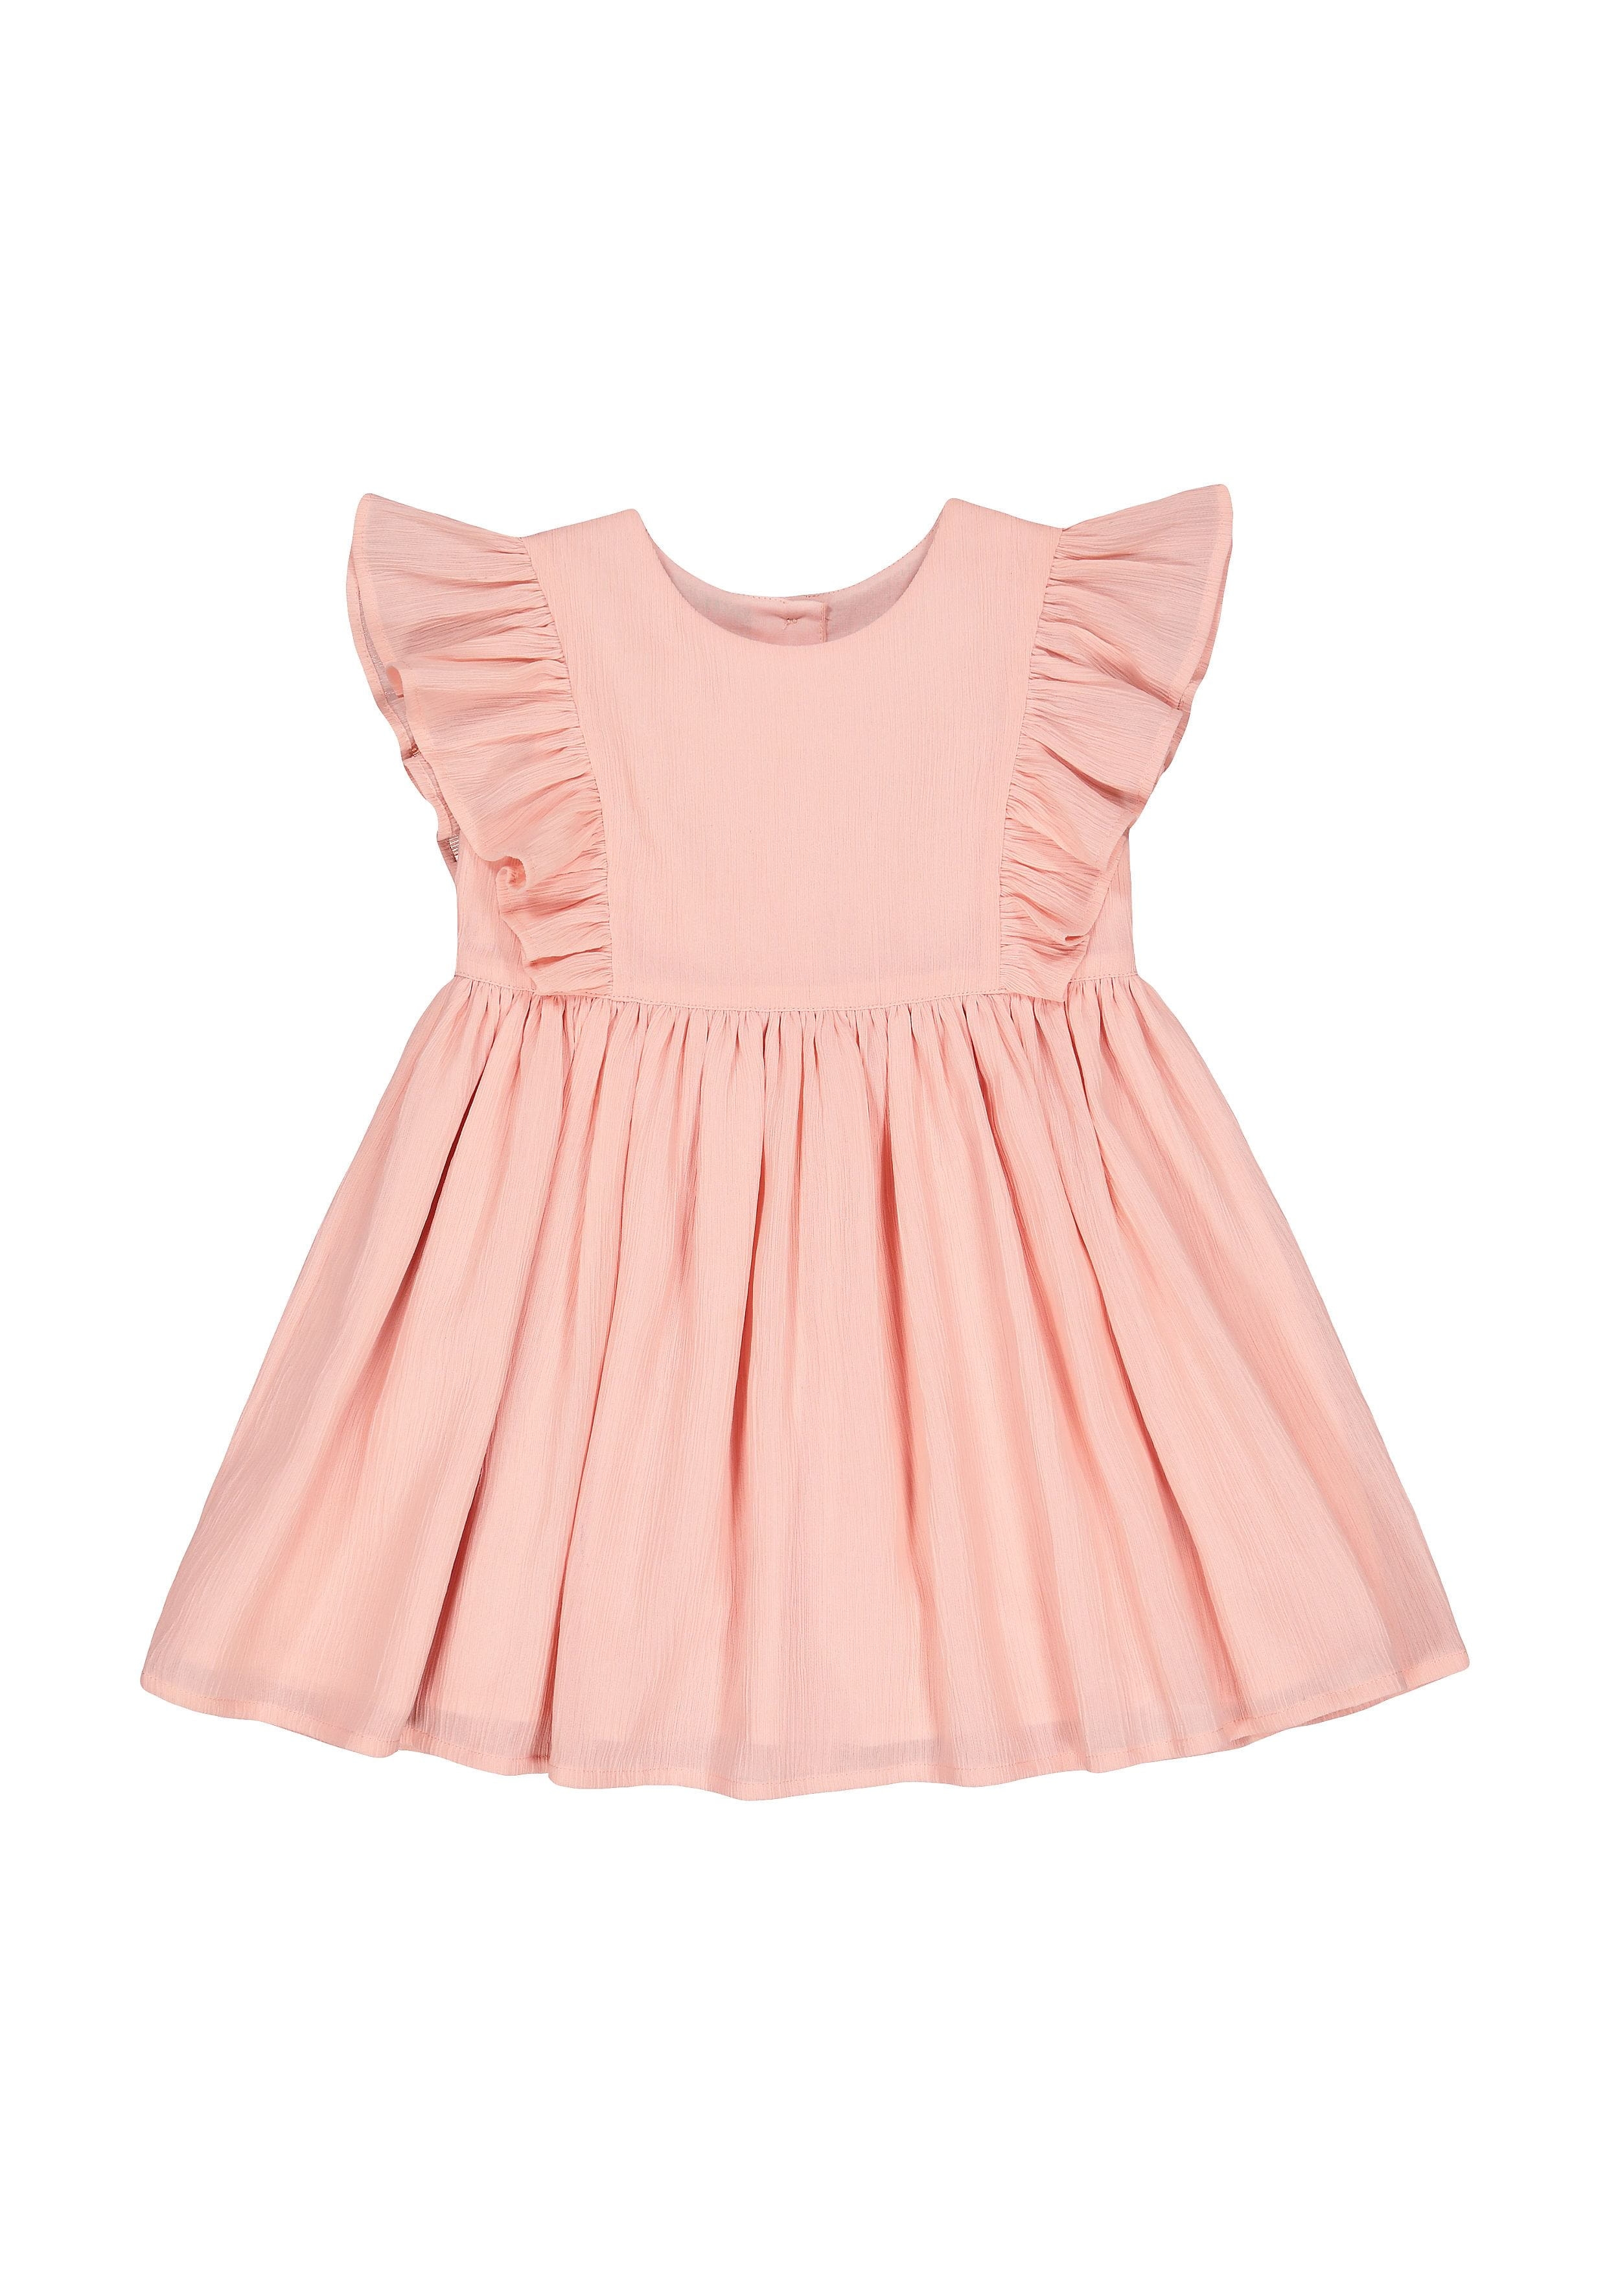 Mothercare | Girls Sleeveless Dress Frill Detail - Pink 0